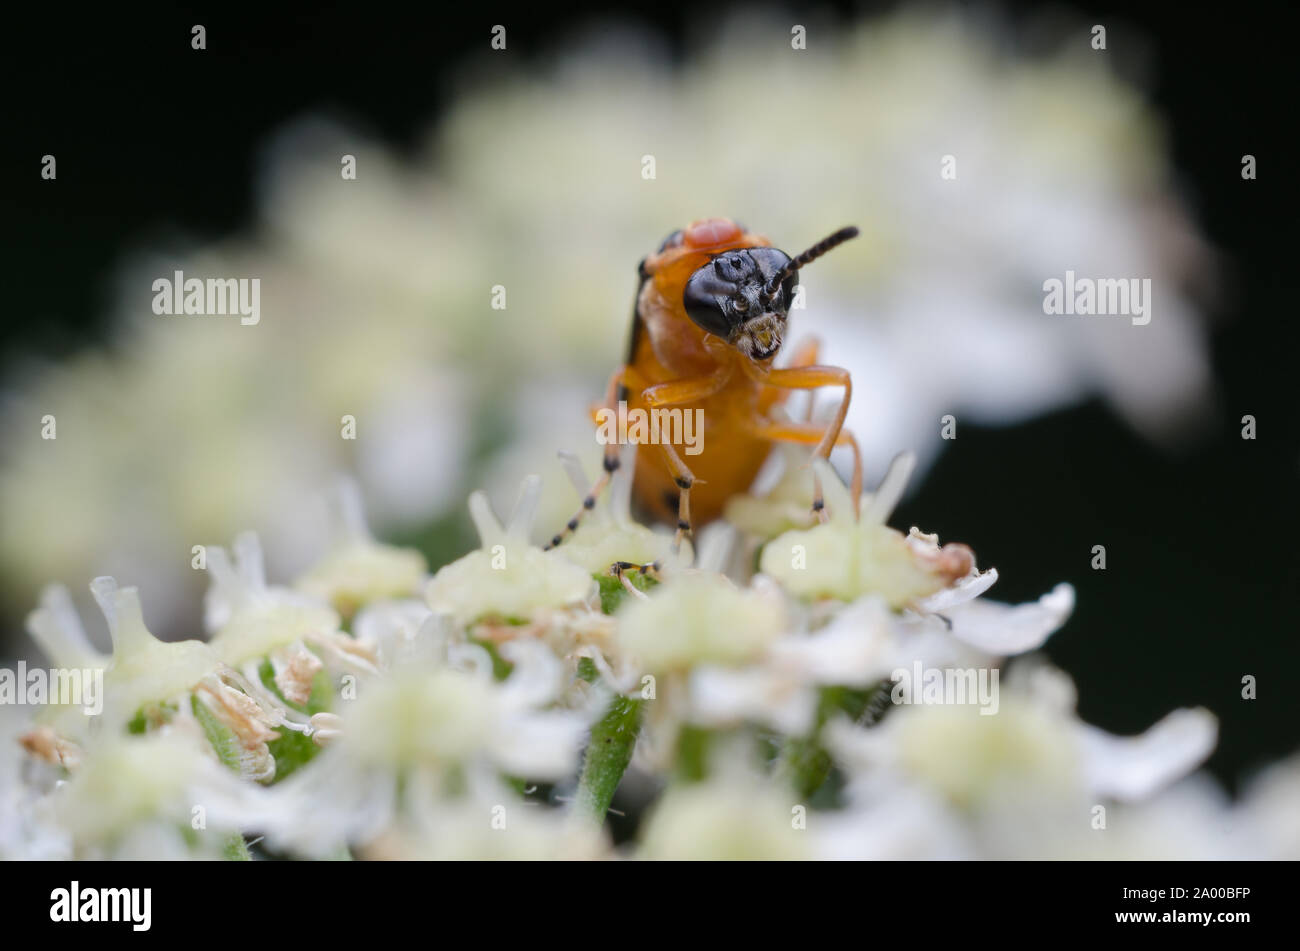 Athalia rosae, macro of a turnip sawfly on a flowering plant Stock Photo